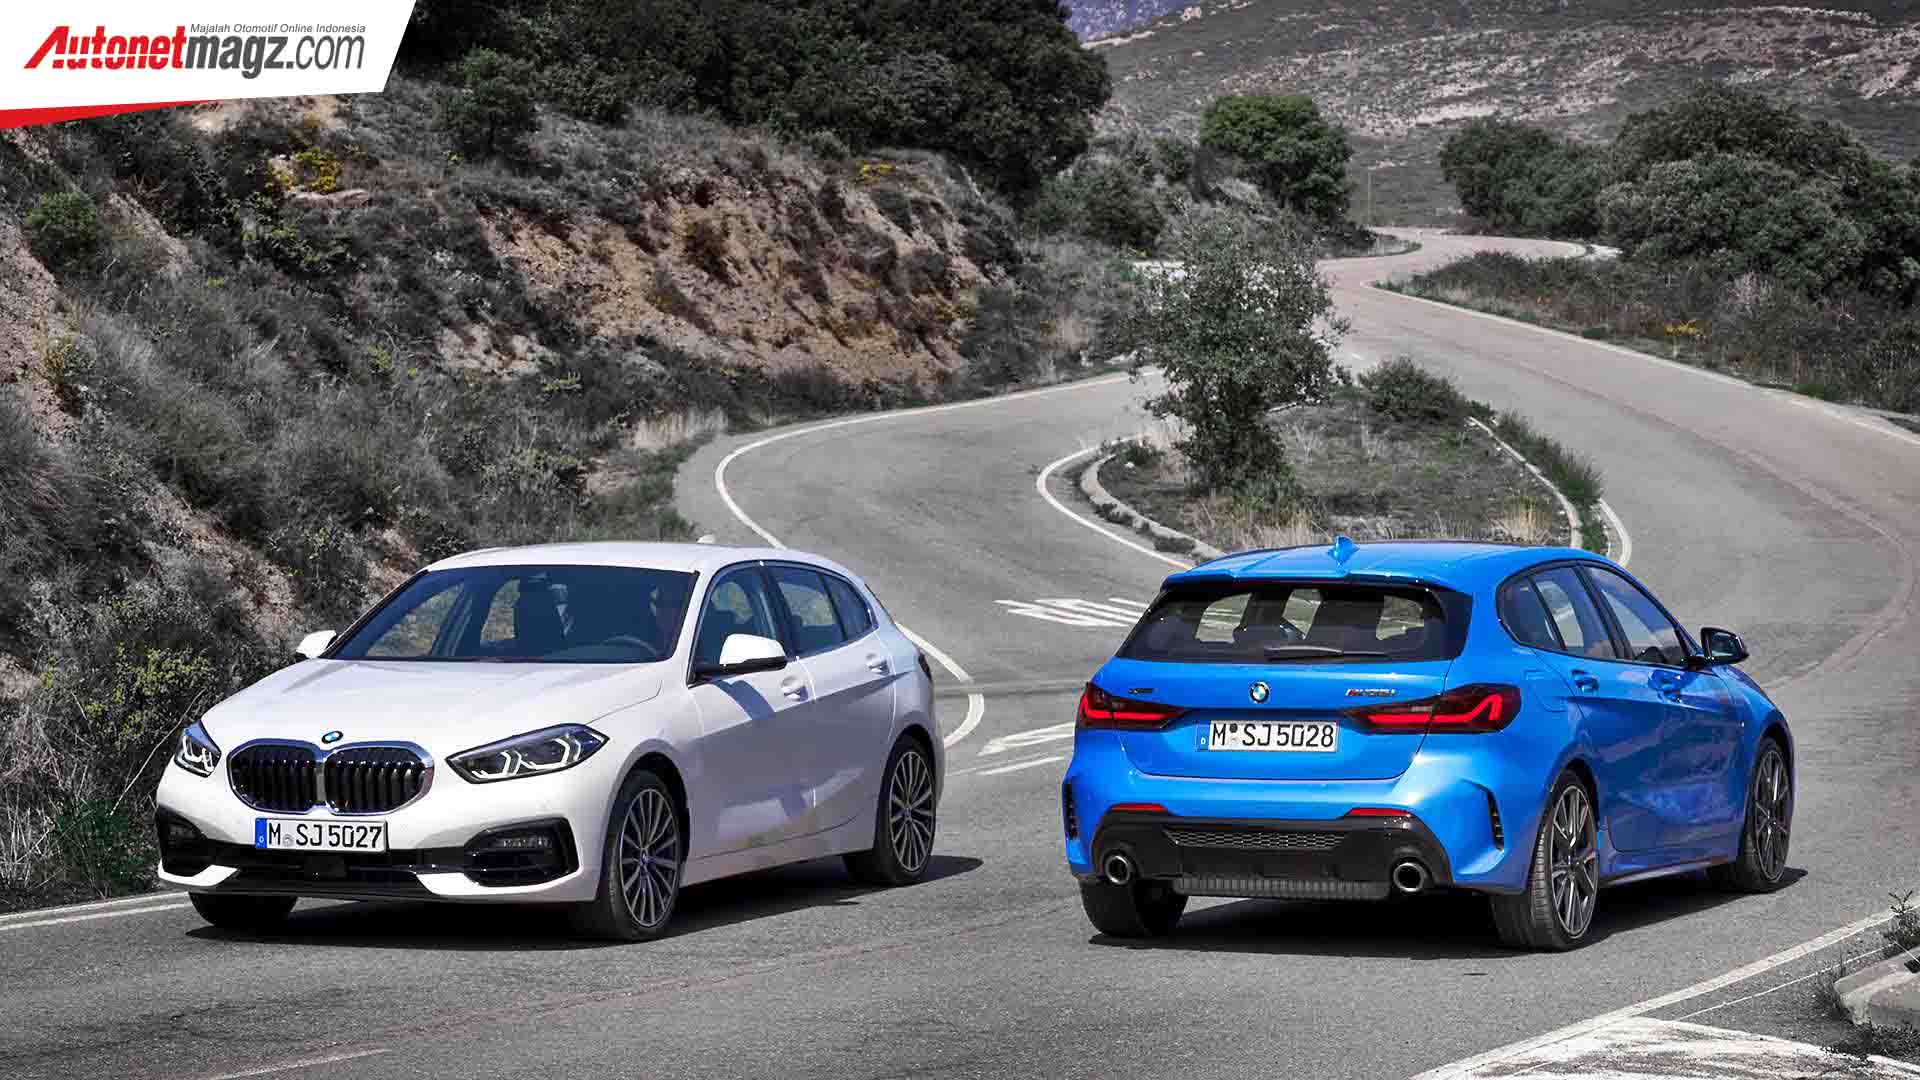 Berita, All New BMW 1 Series 2020: BMW 1-Series 2020 Diperkenalkan, Versi Hatchback BMW X2?